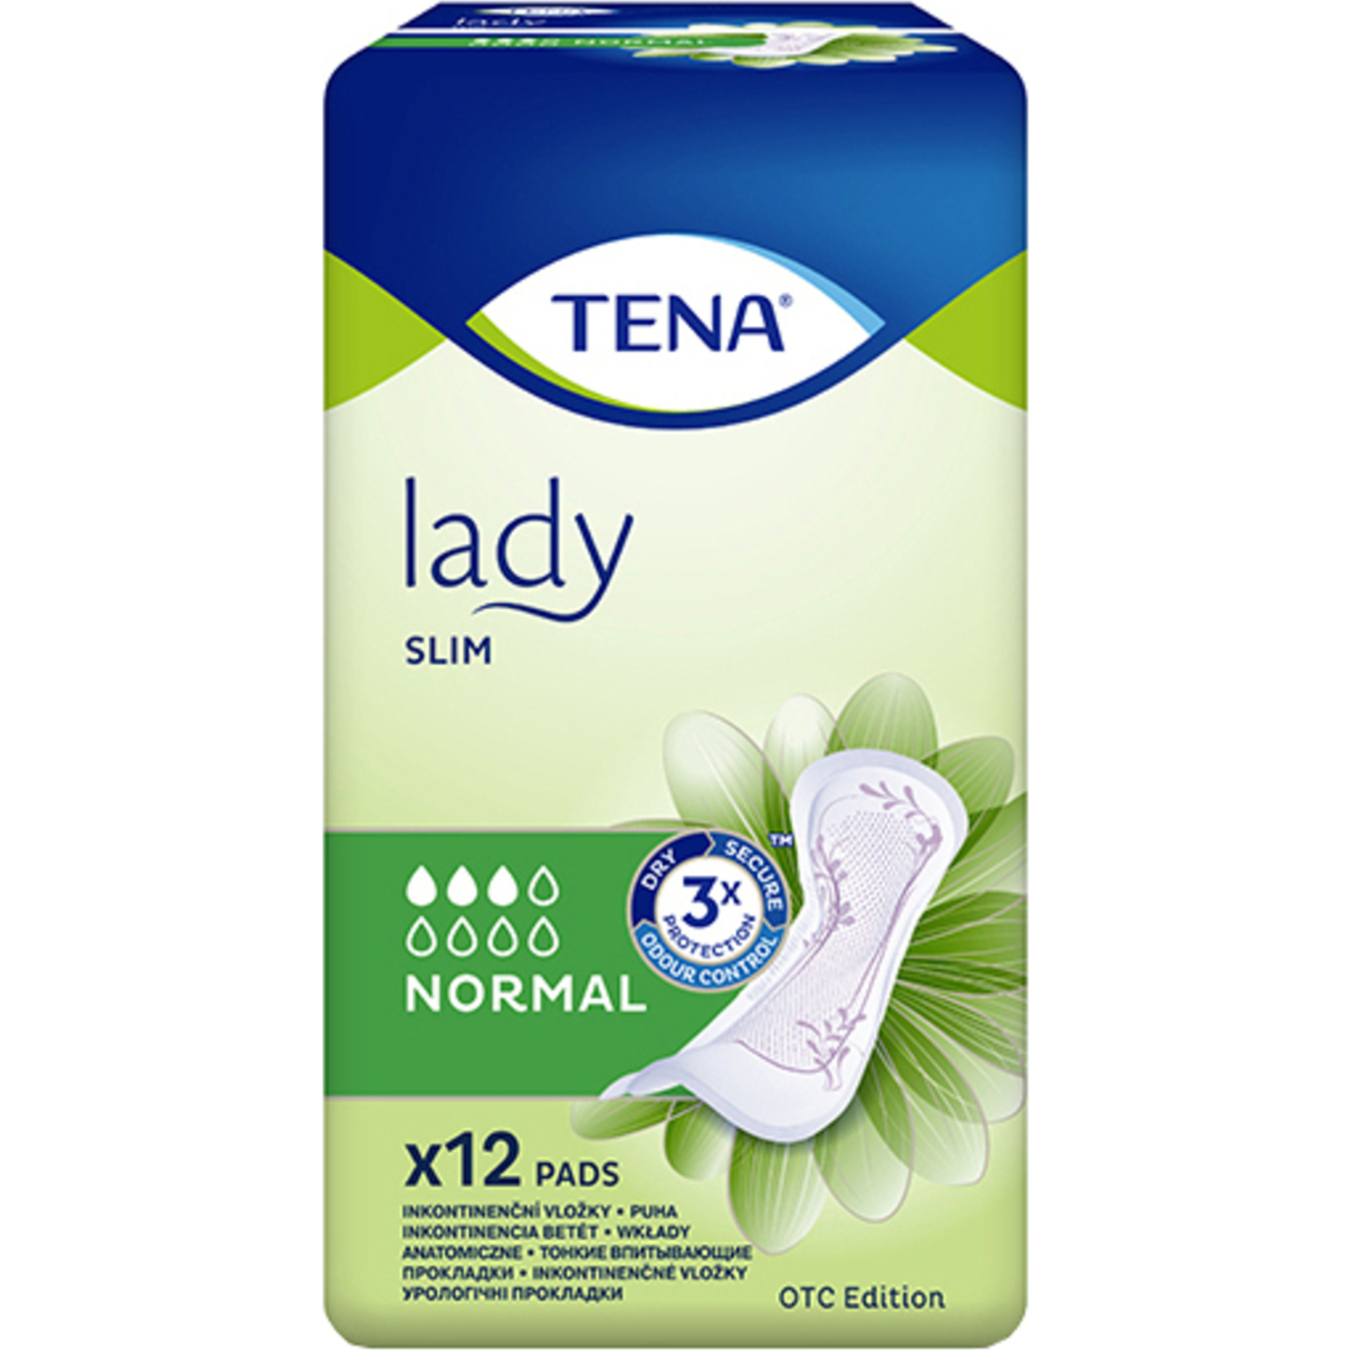 Tena Lady Slim Normal Urological Pads for women 12pcs